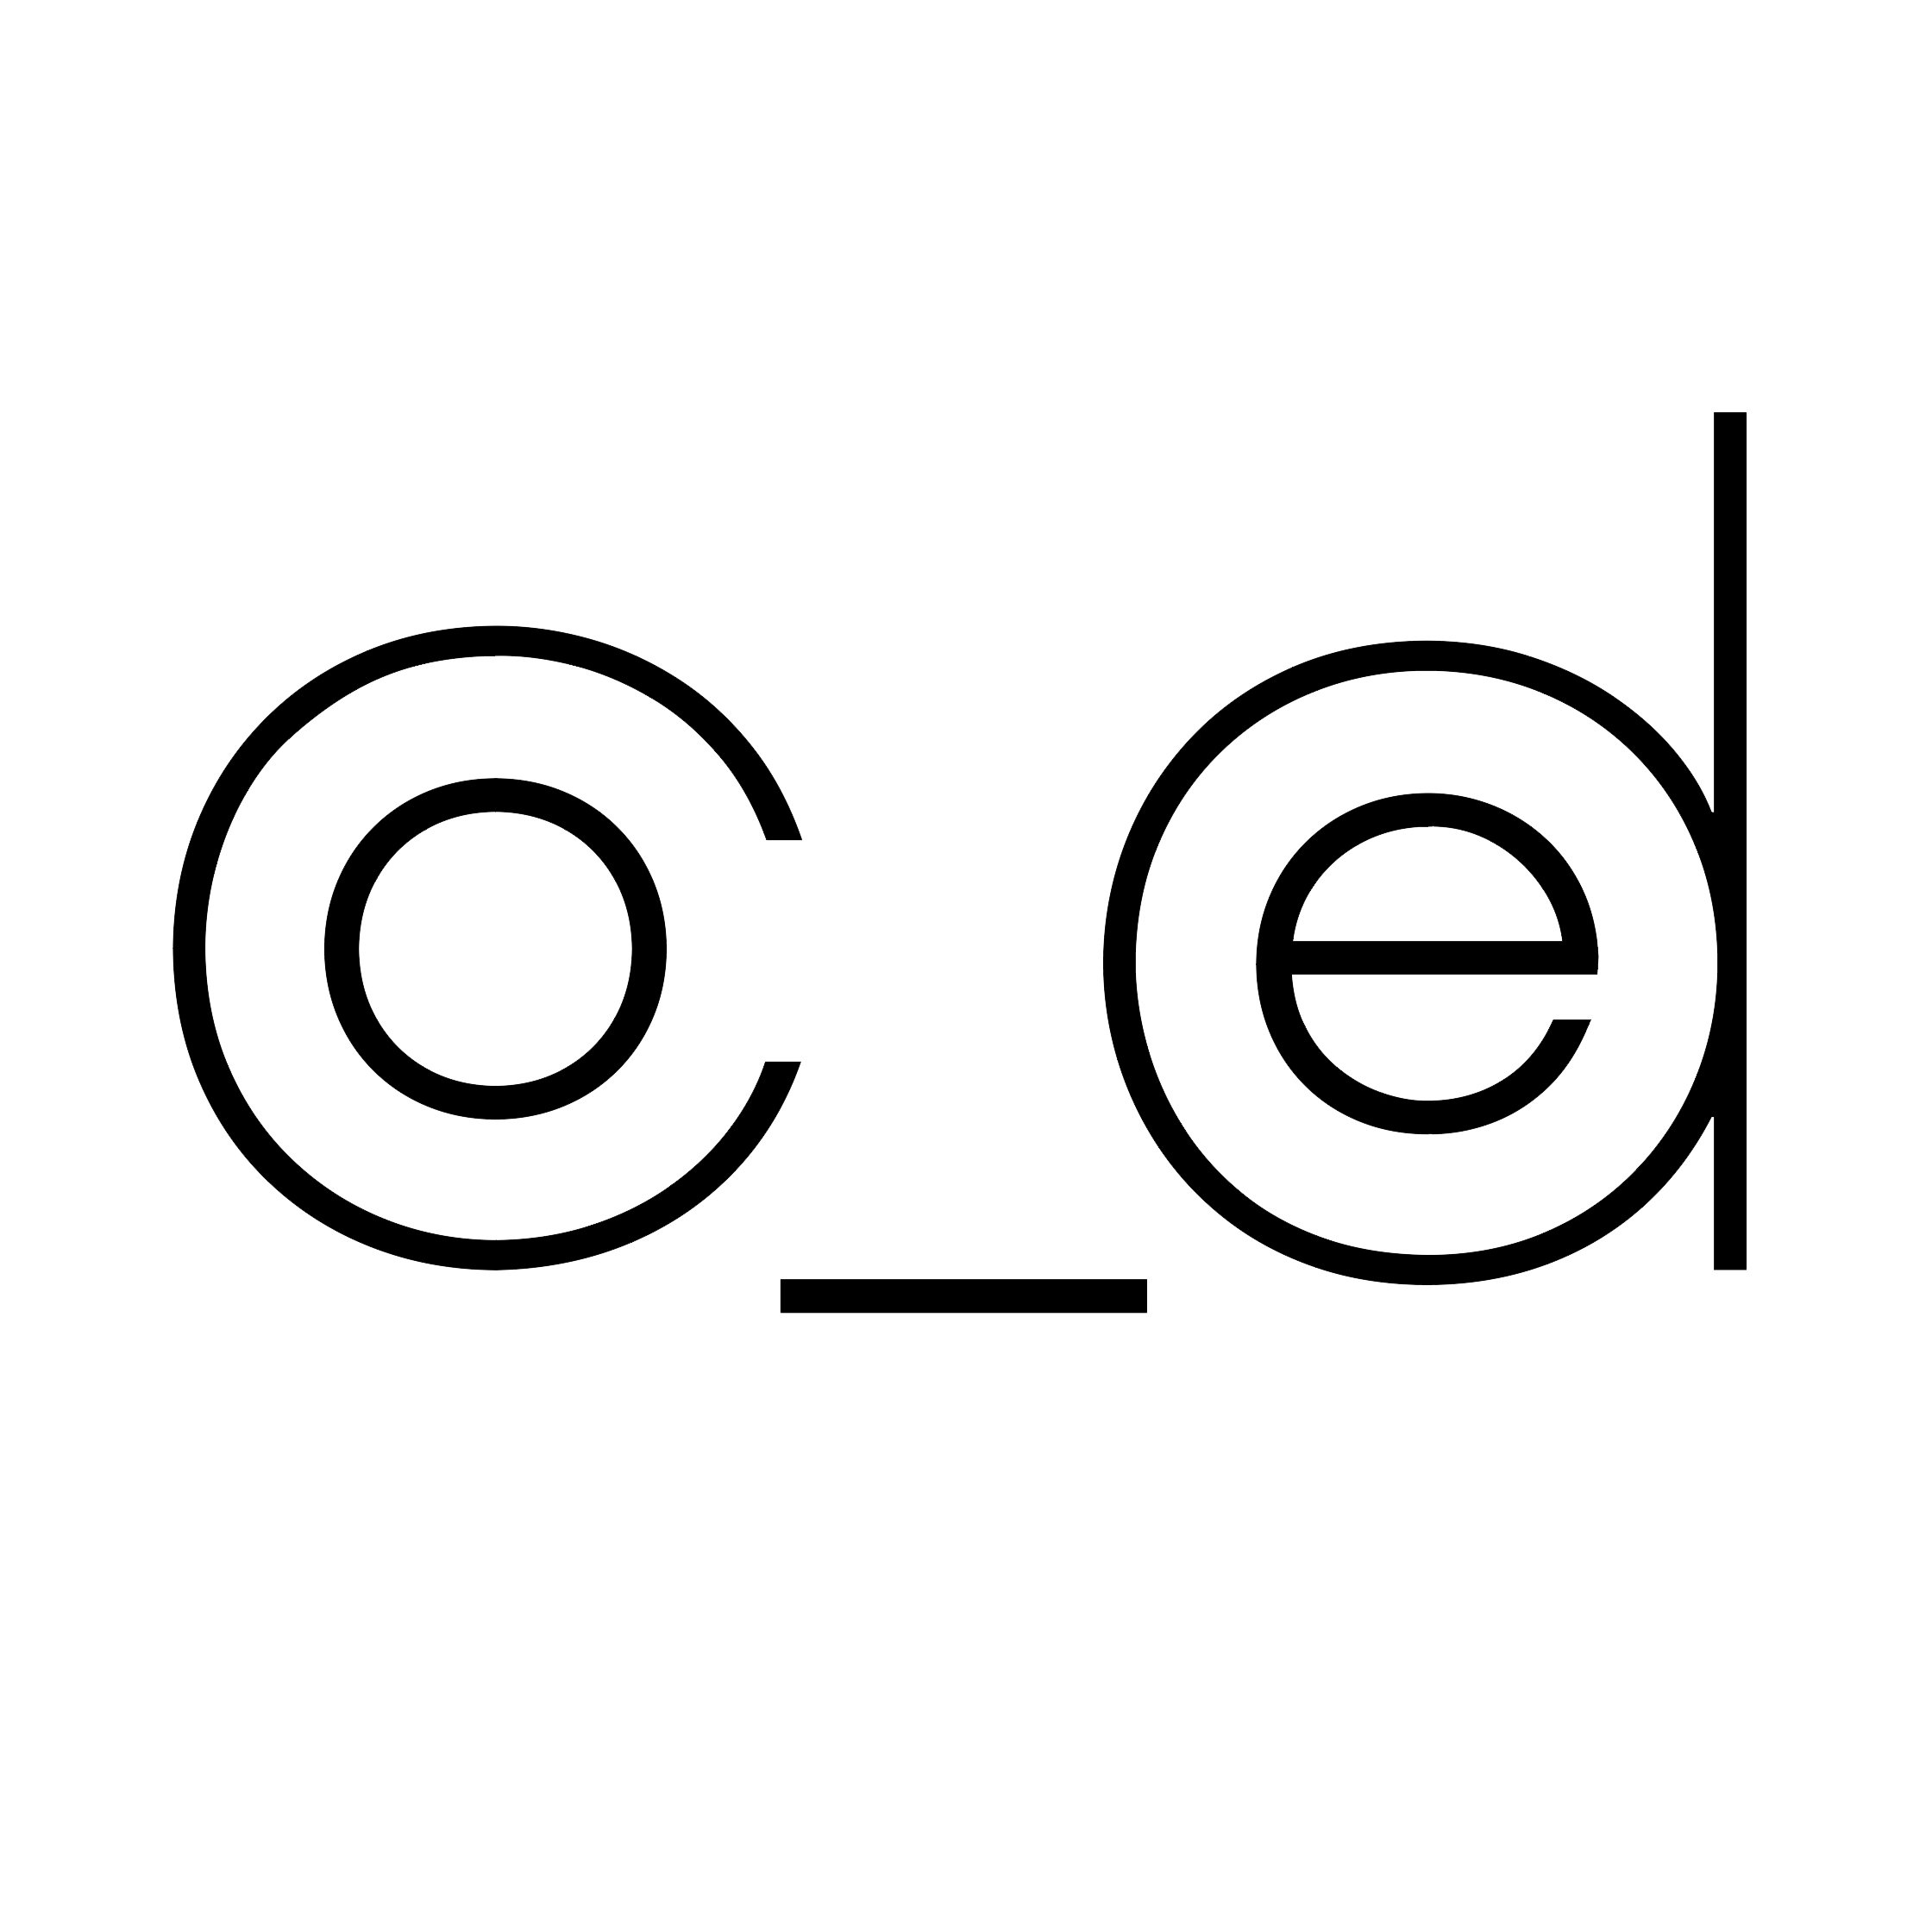 COED_Logo_Large.jpg